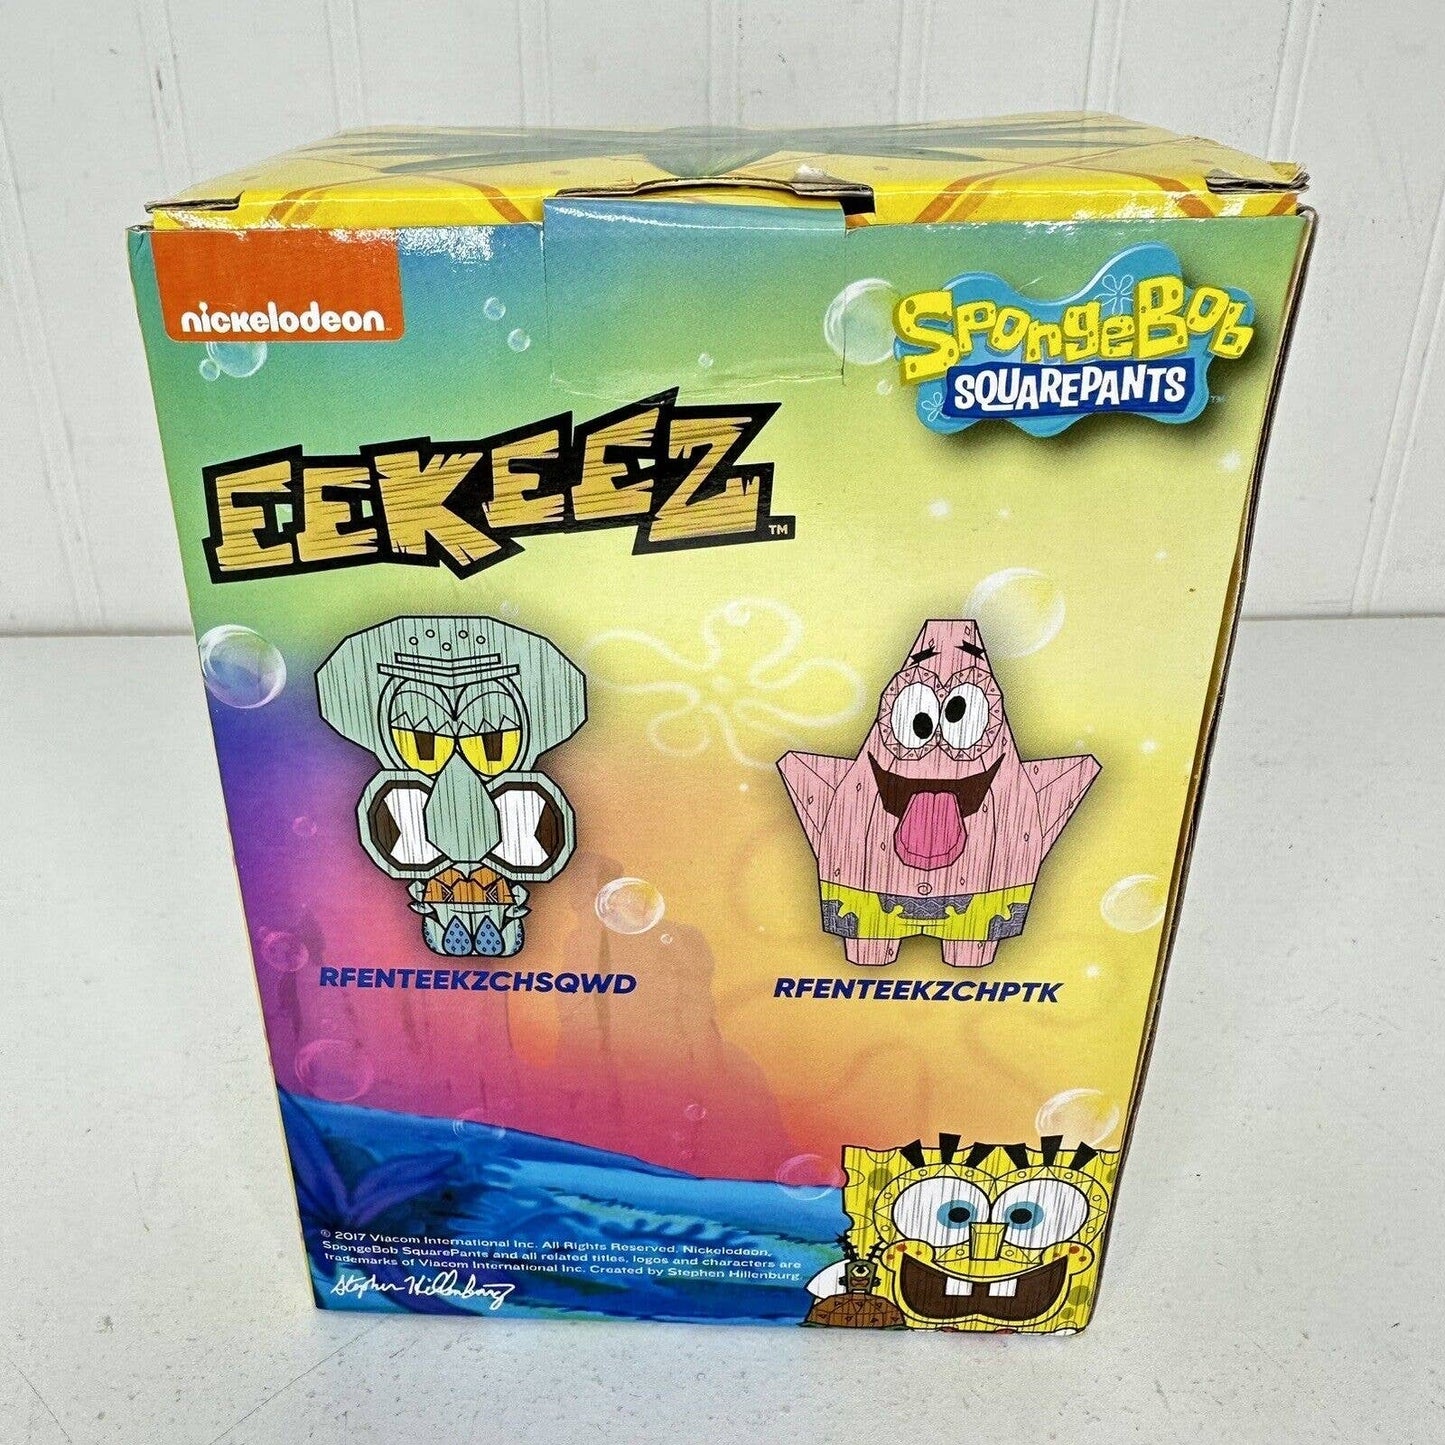 SPONGEBOB 2017 EEKEEZ TIKI 4" Figurine Nickelodeon Limited Edition New